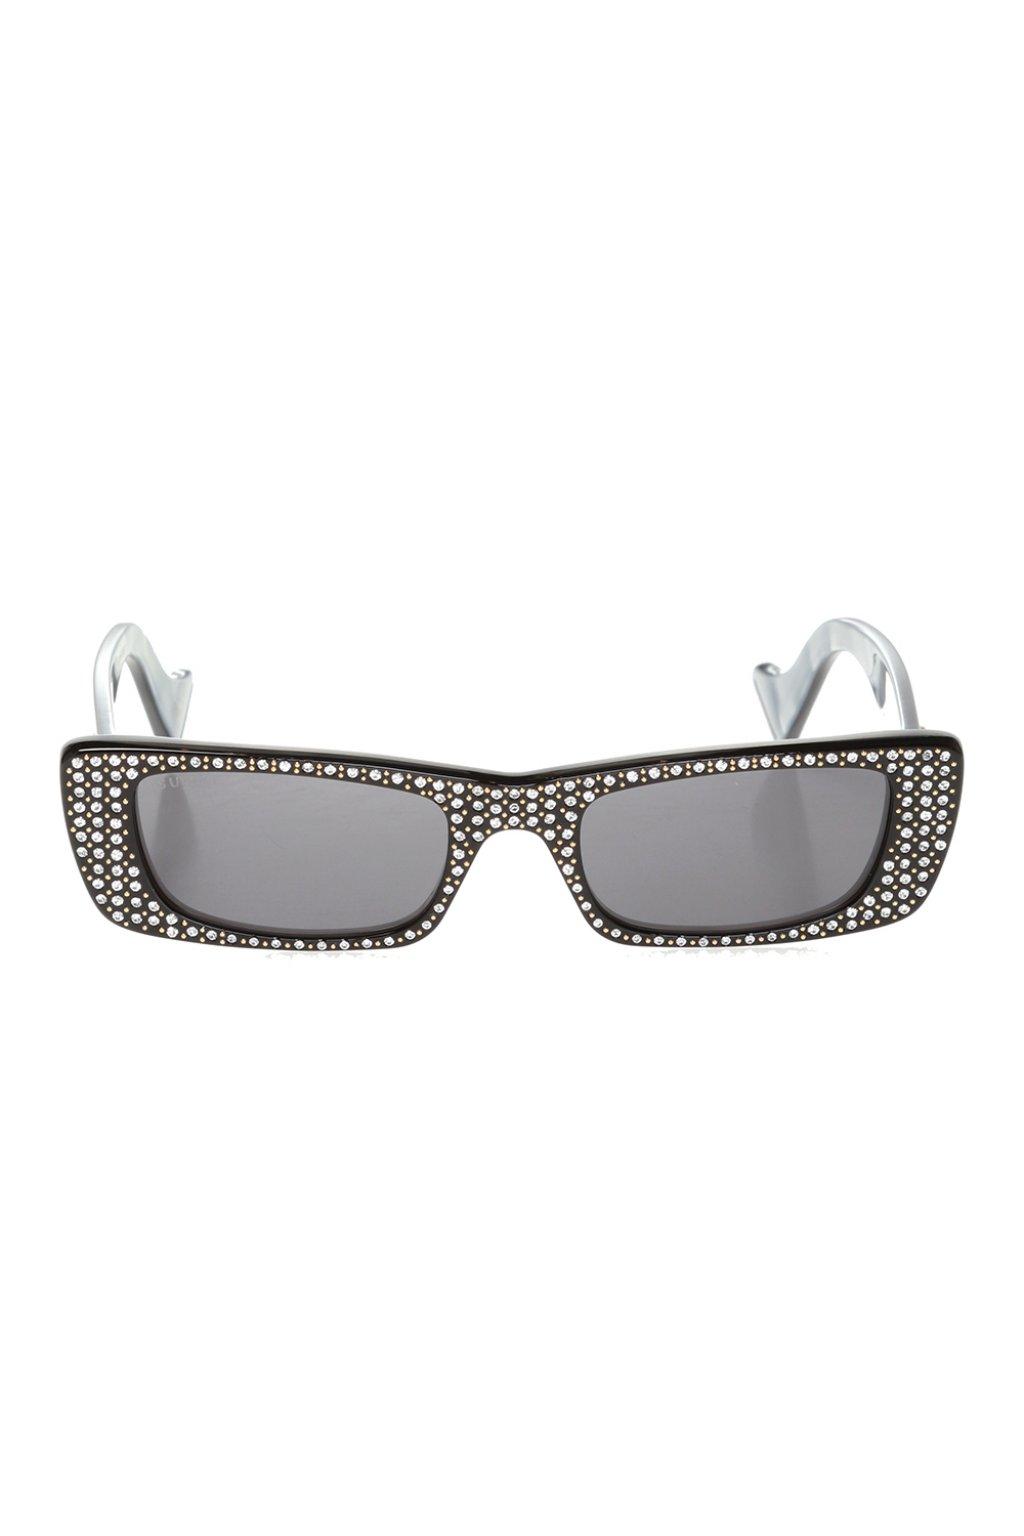 Gucci Logo Sunglasses in Black - Lyst